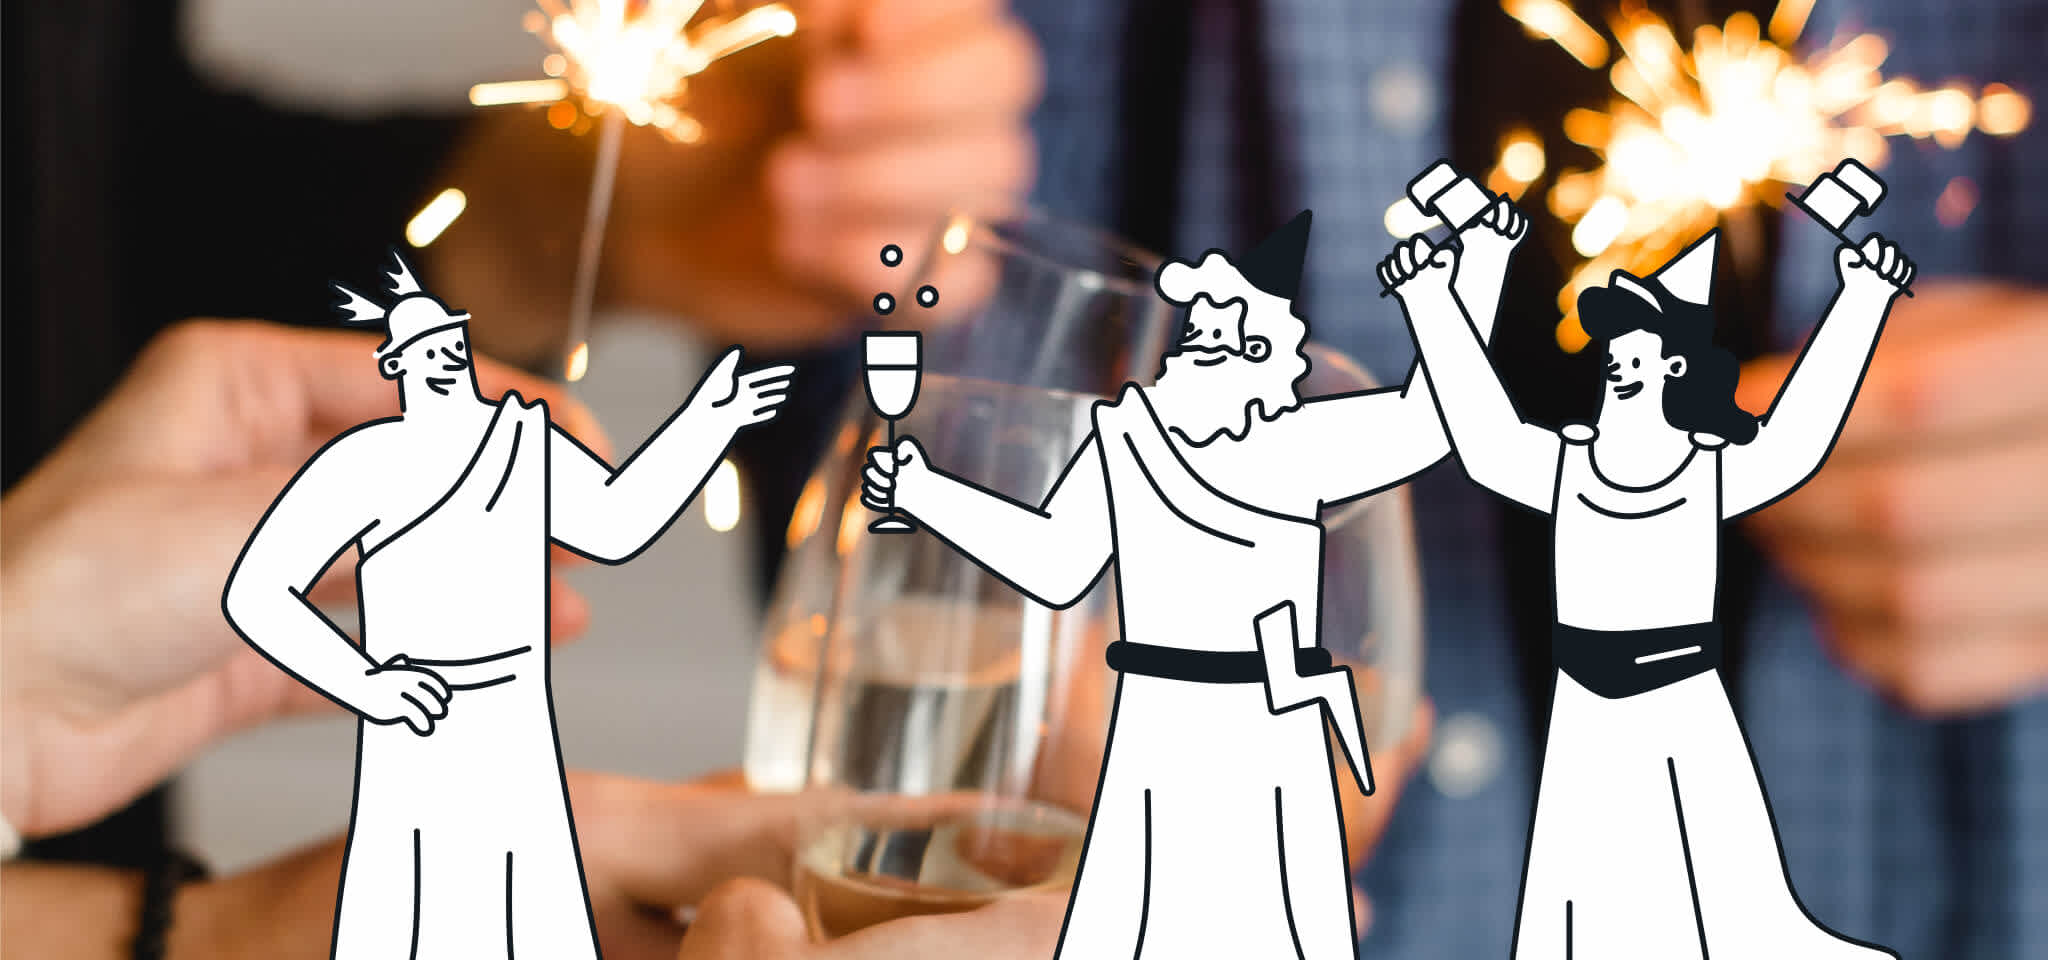 Three Gods celebrate with some drinks